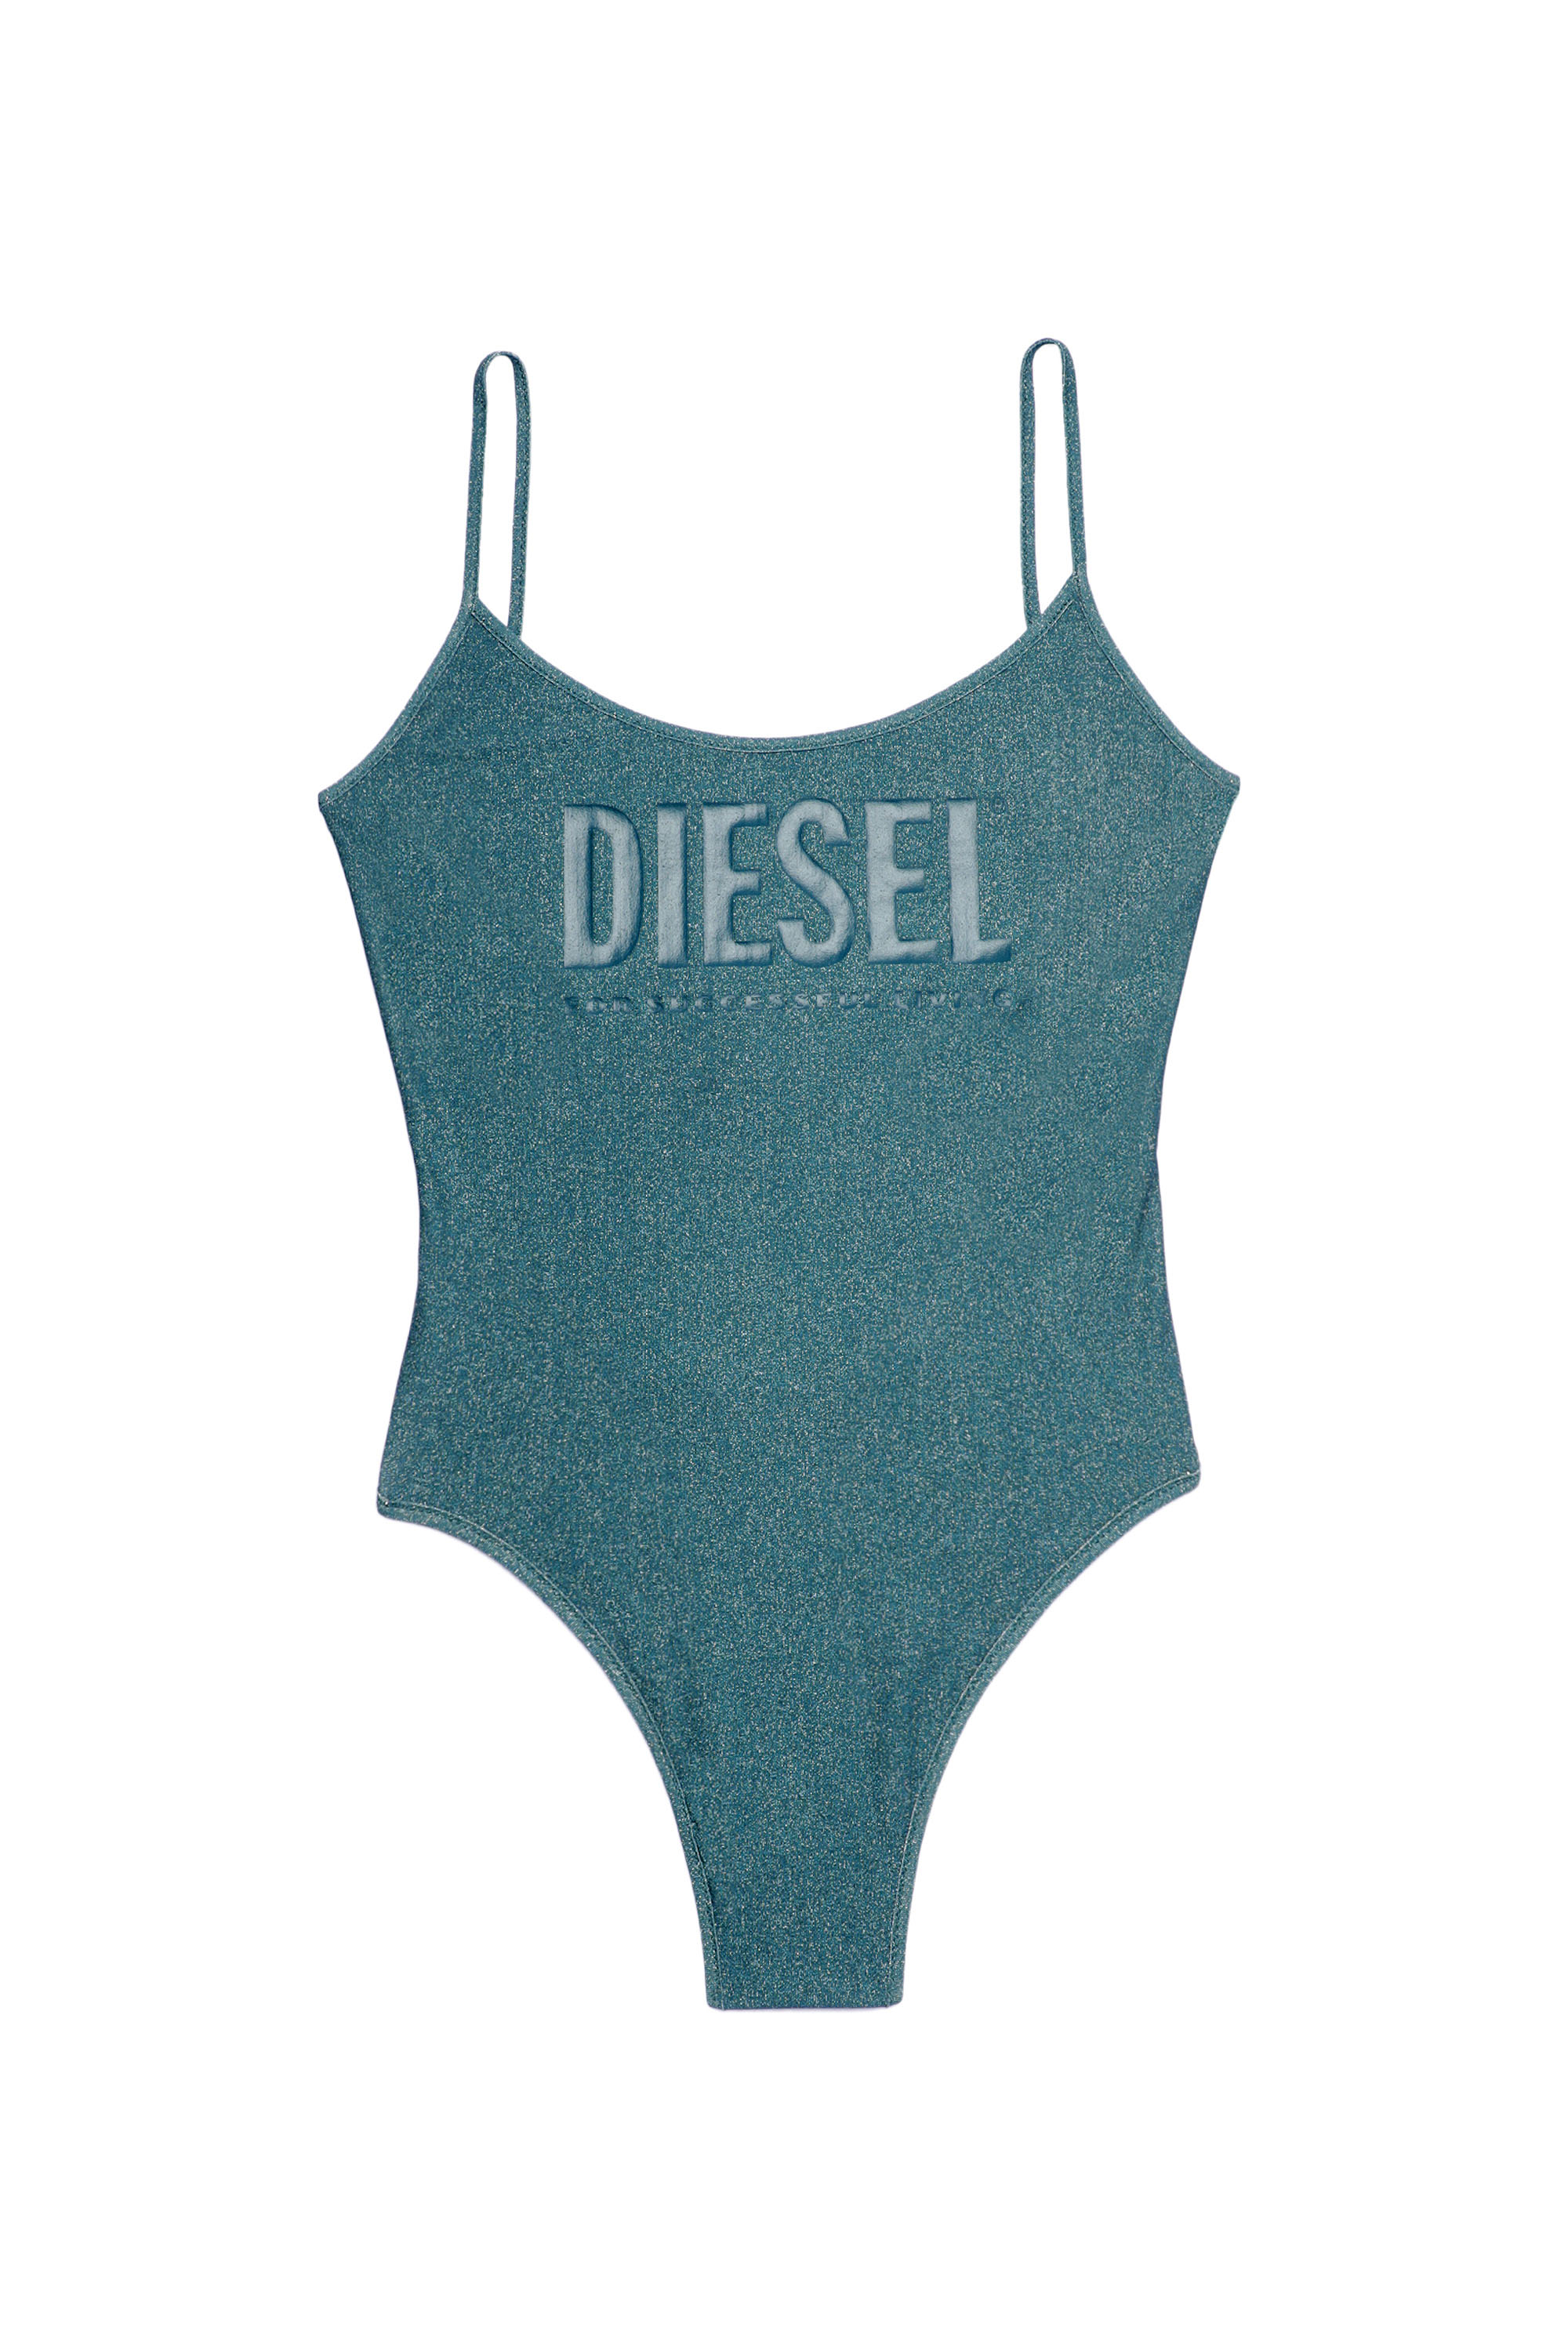 Diesel - BFSW-GRETEL, Blau - Image 3